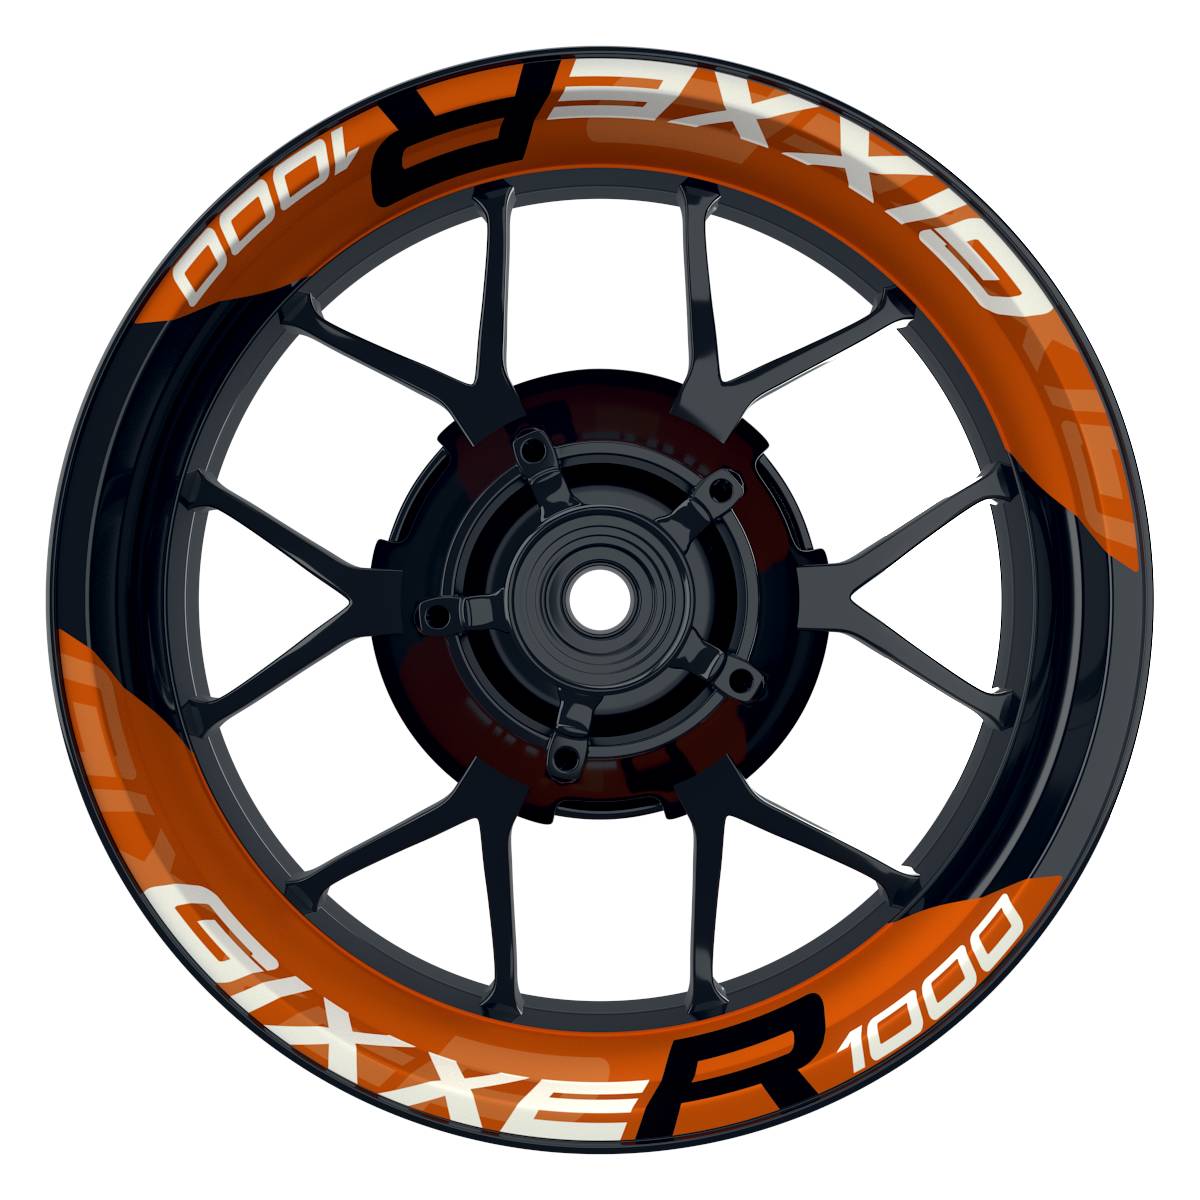 Wheelsticker Felgenaufkleber GIXXER1000 einfarbig V2 orange Frontansicht